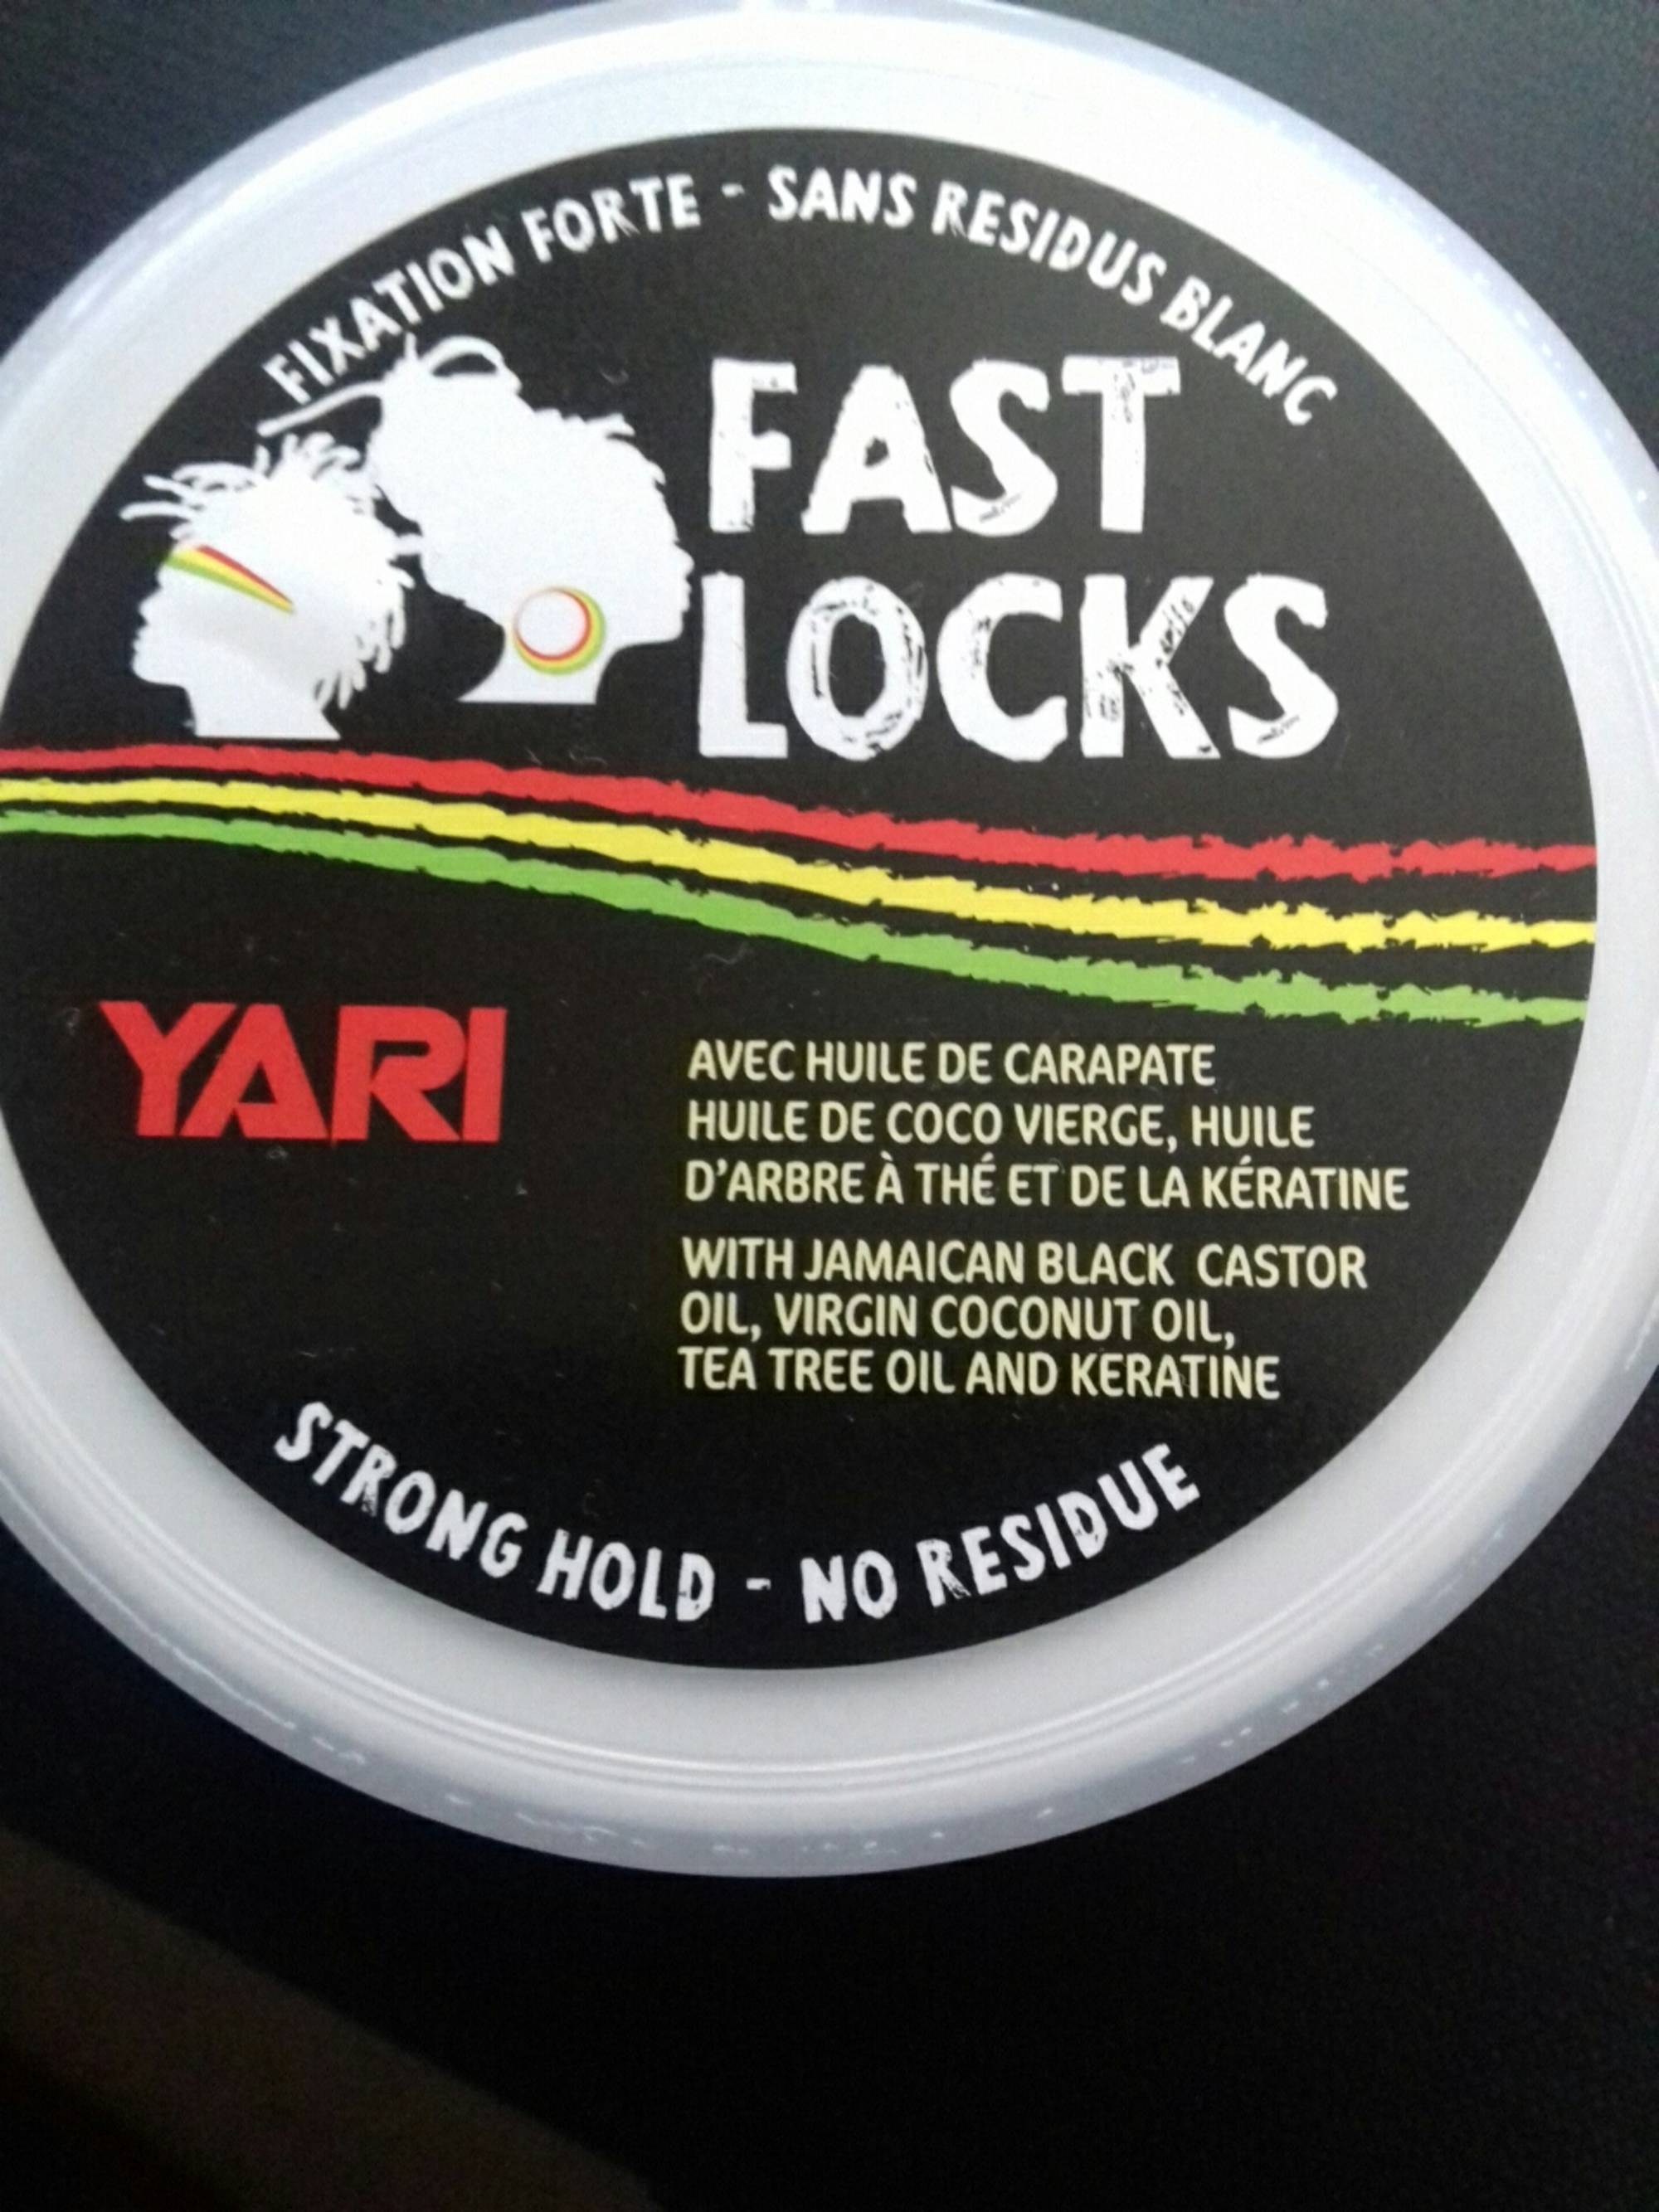 YARI - Fast locks fixation forte 